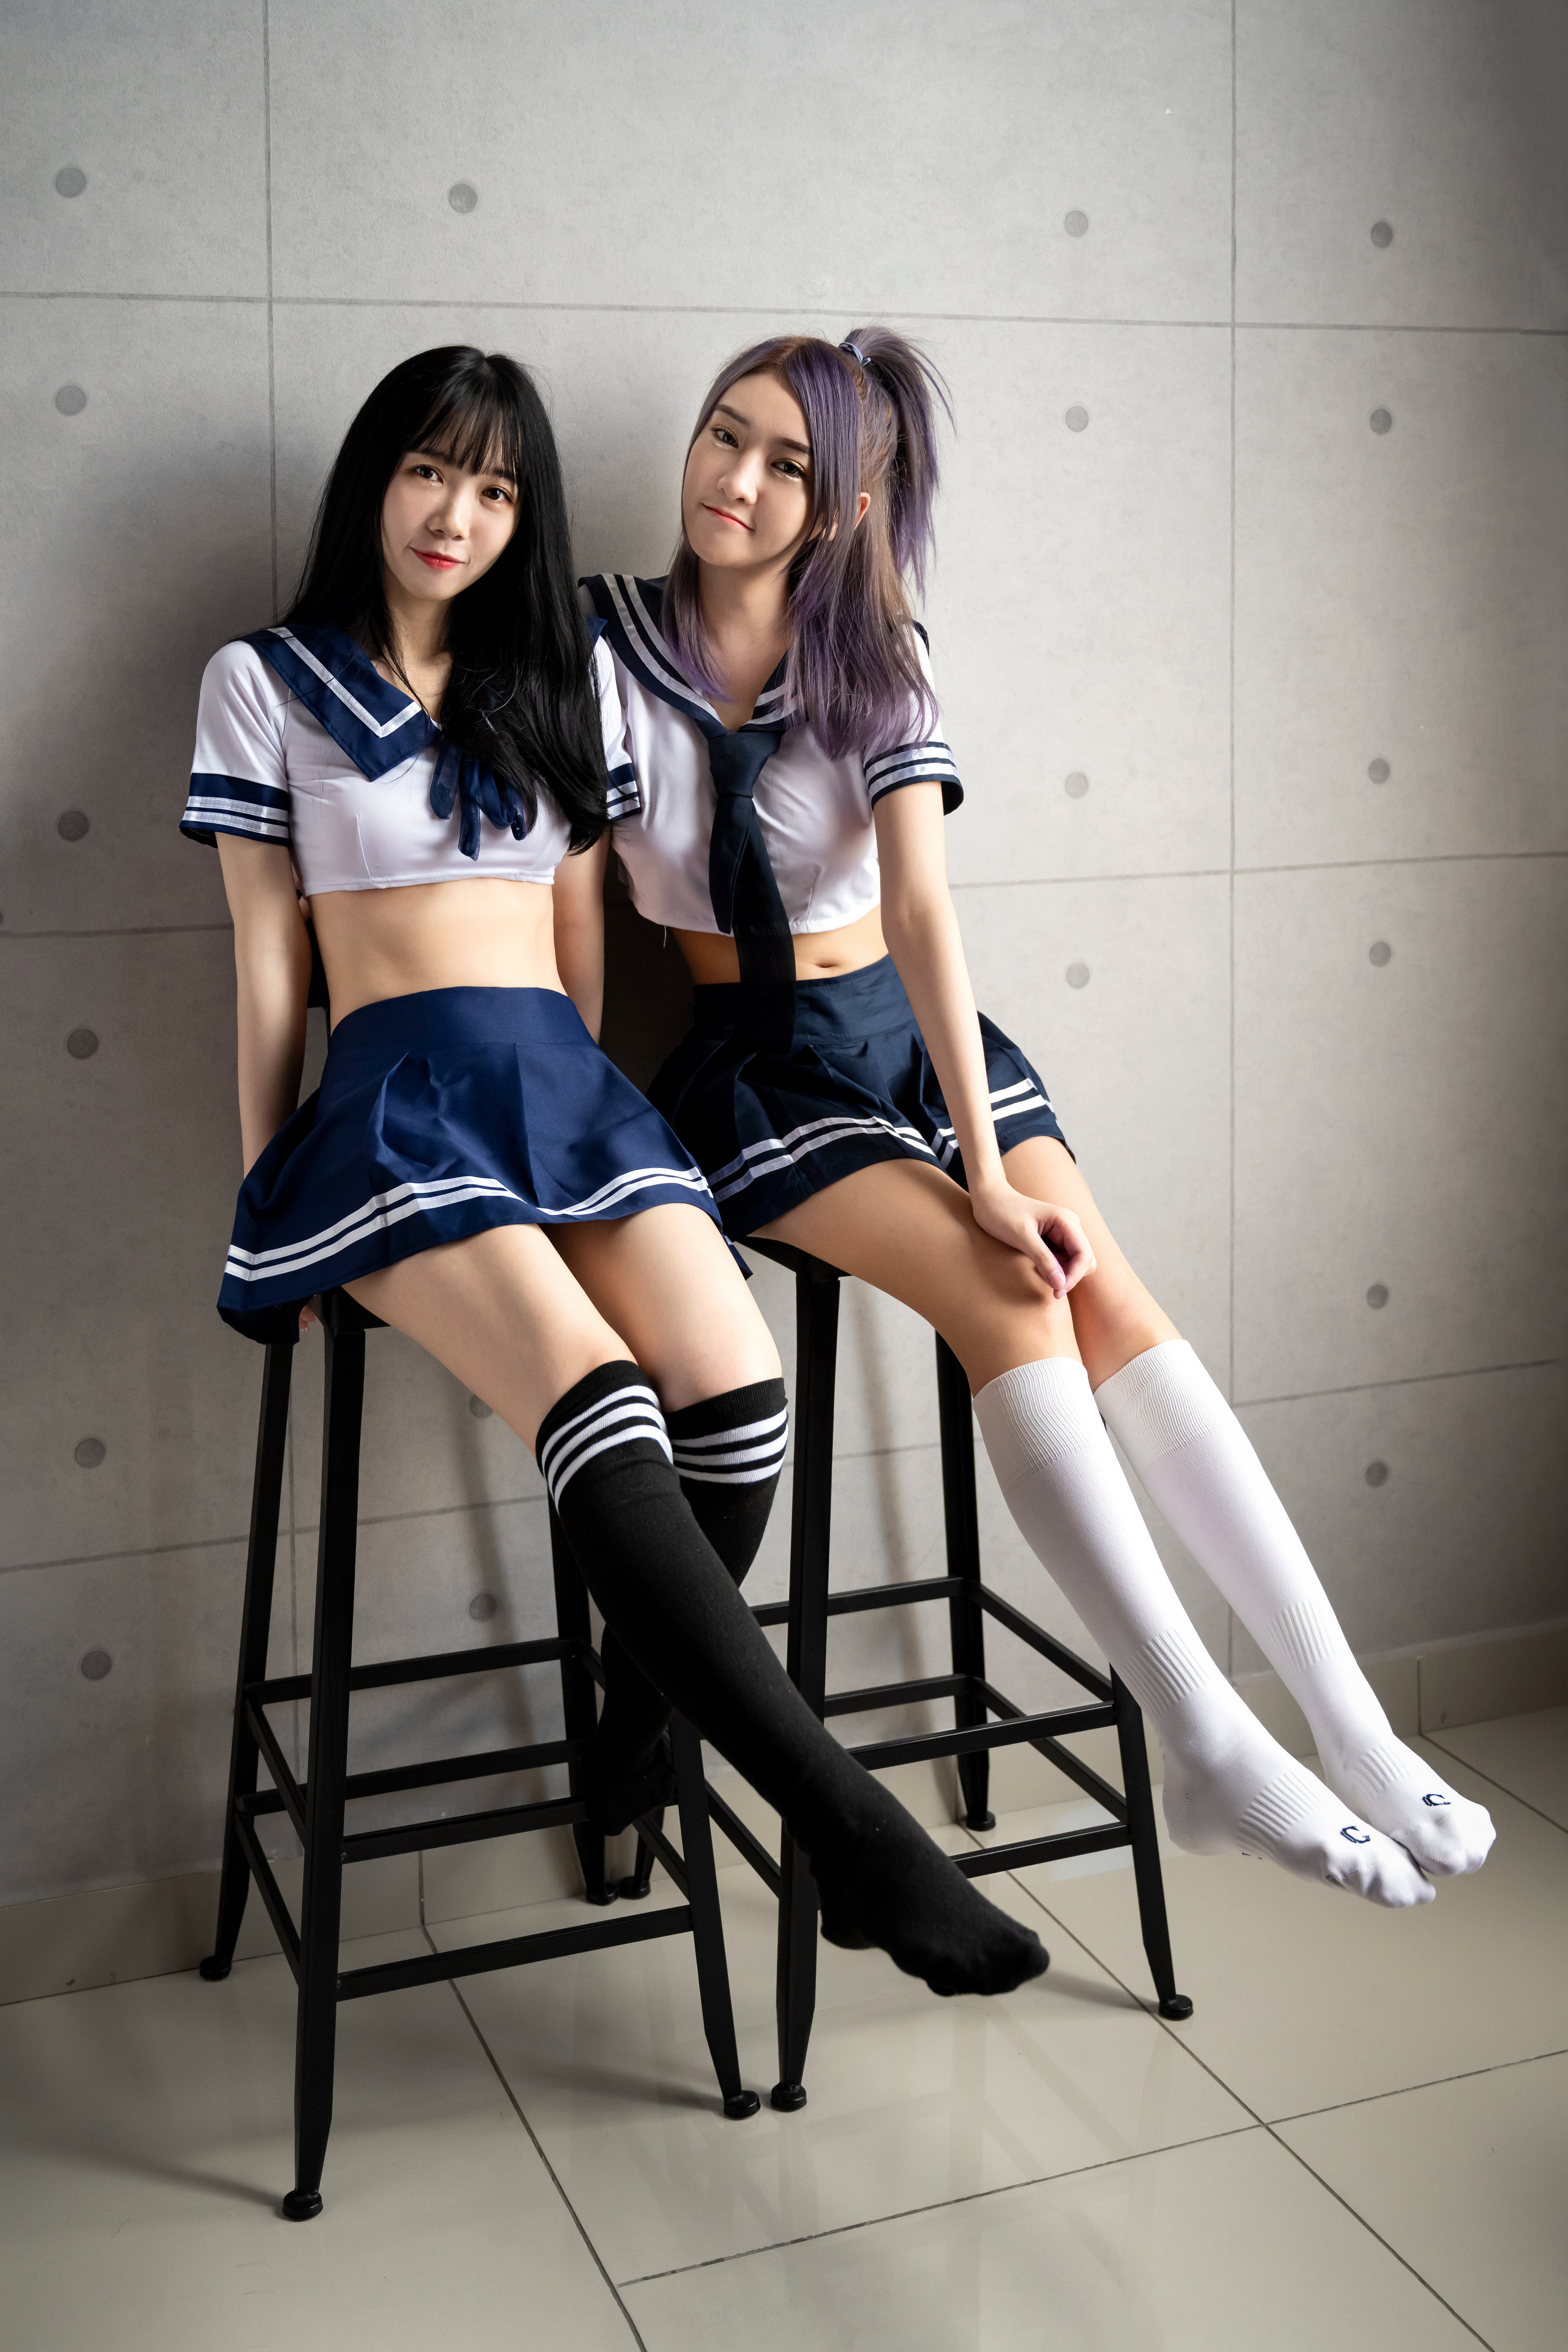 Asian Model Women Long Hair Dark Hair Dyed Hair Sitting School Uniform Knee High Socks Chair Short T 3000x4500